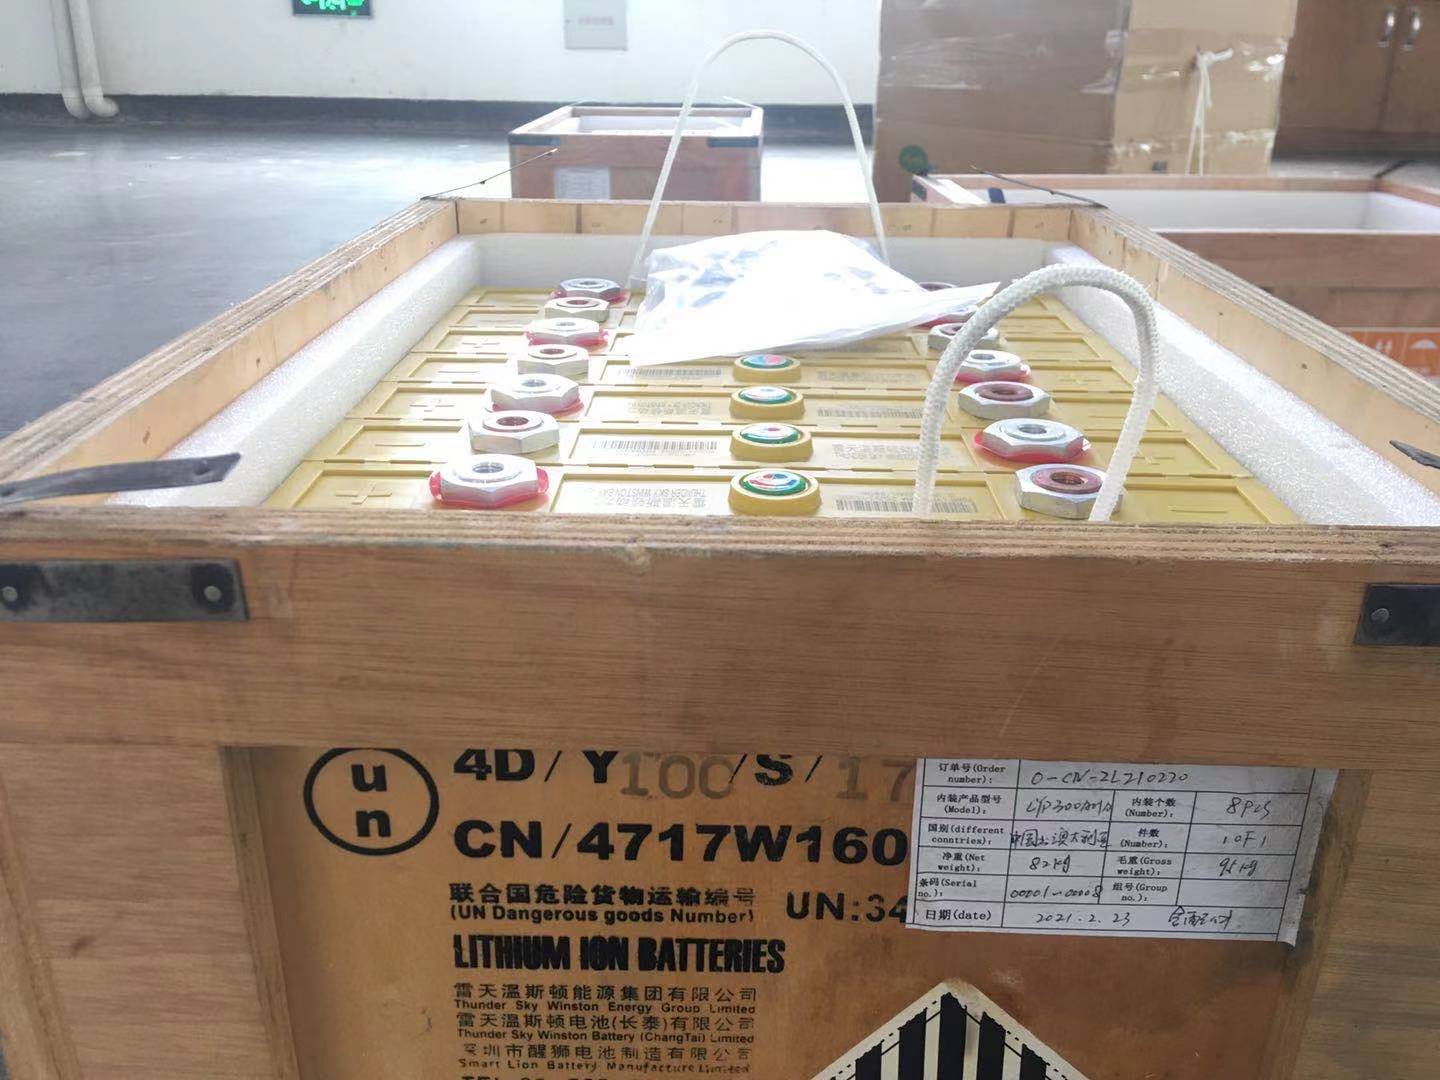 300ah winston batteries shipped to australia